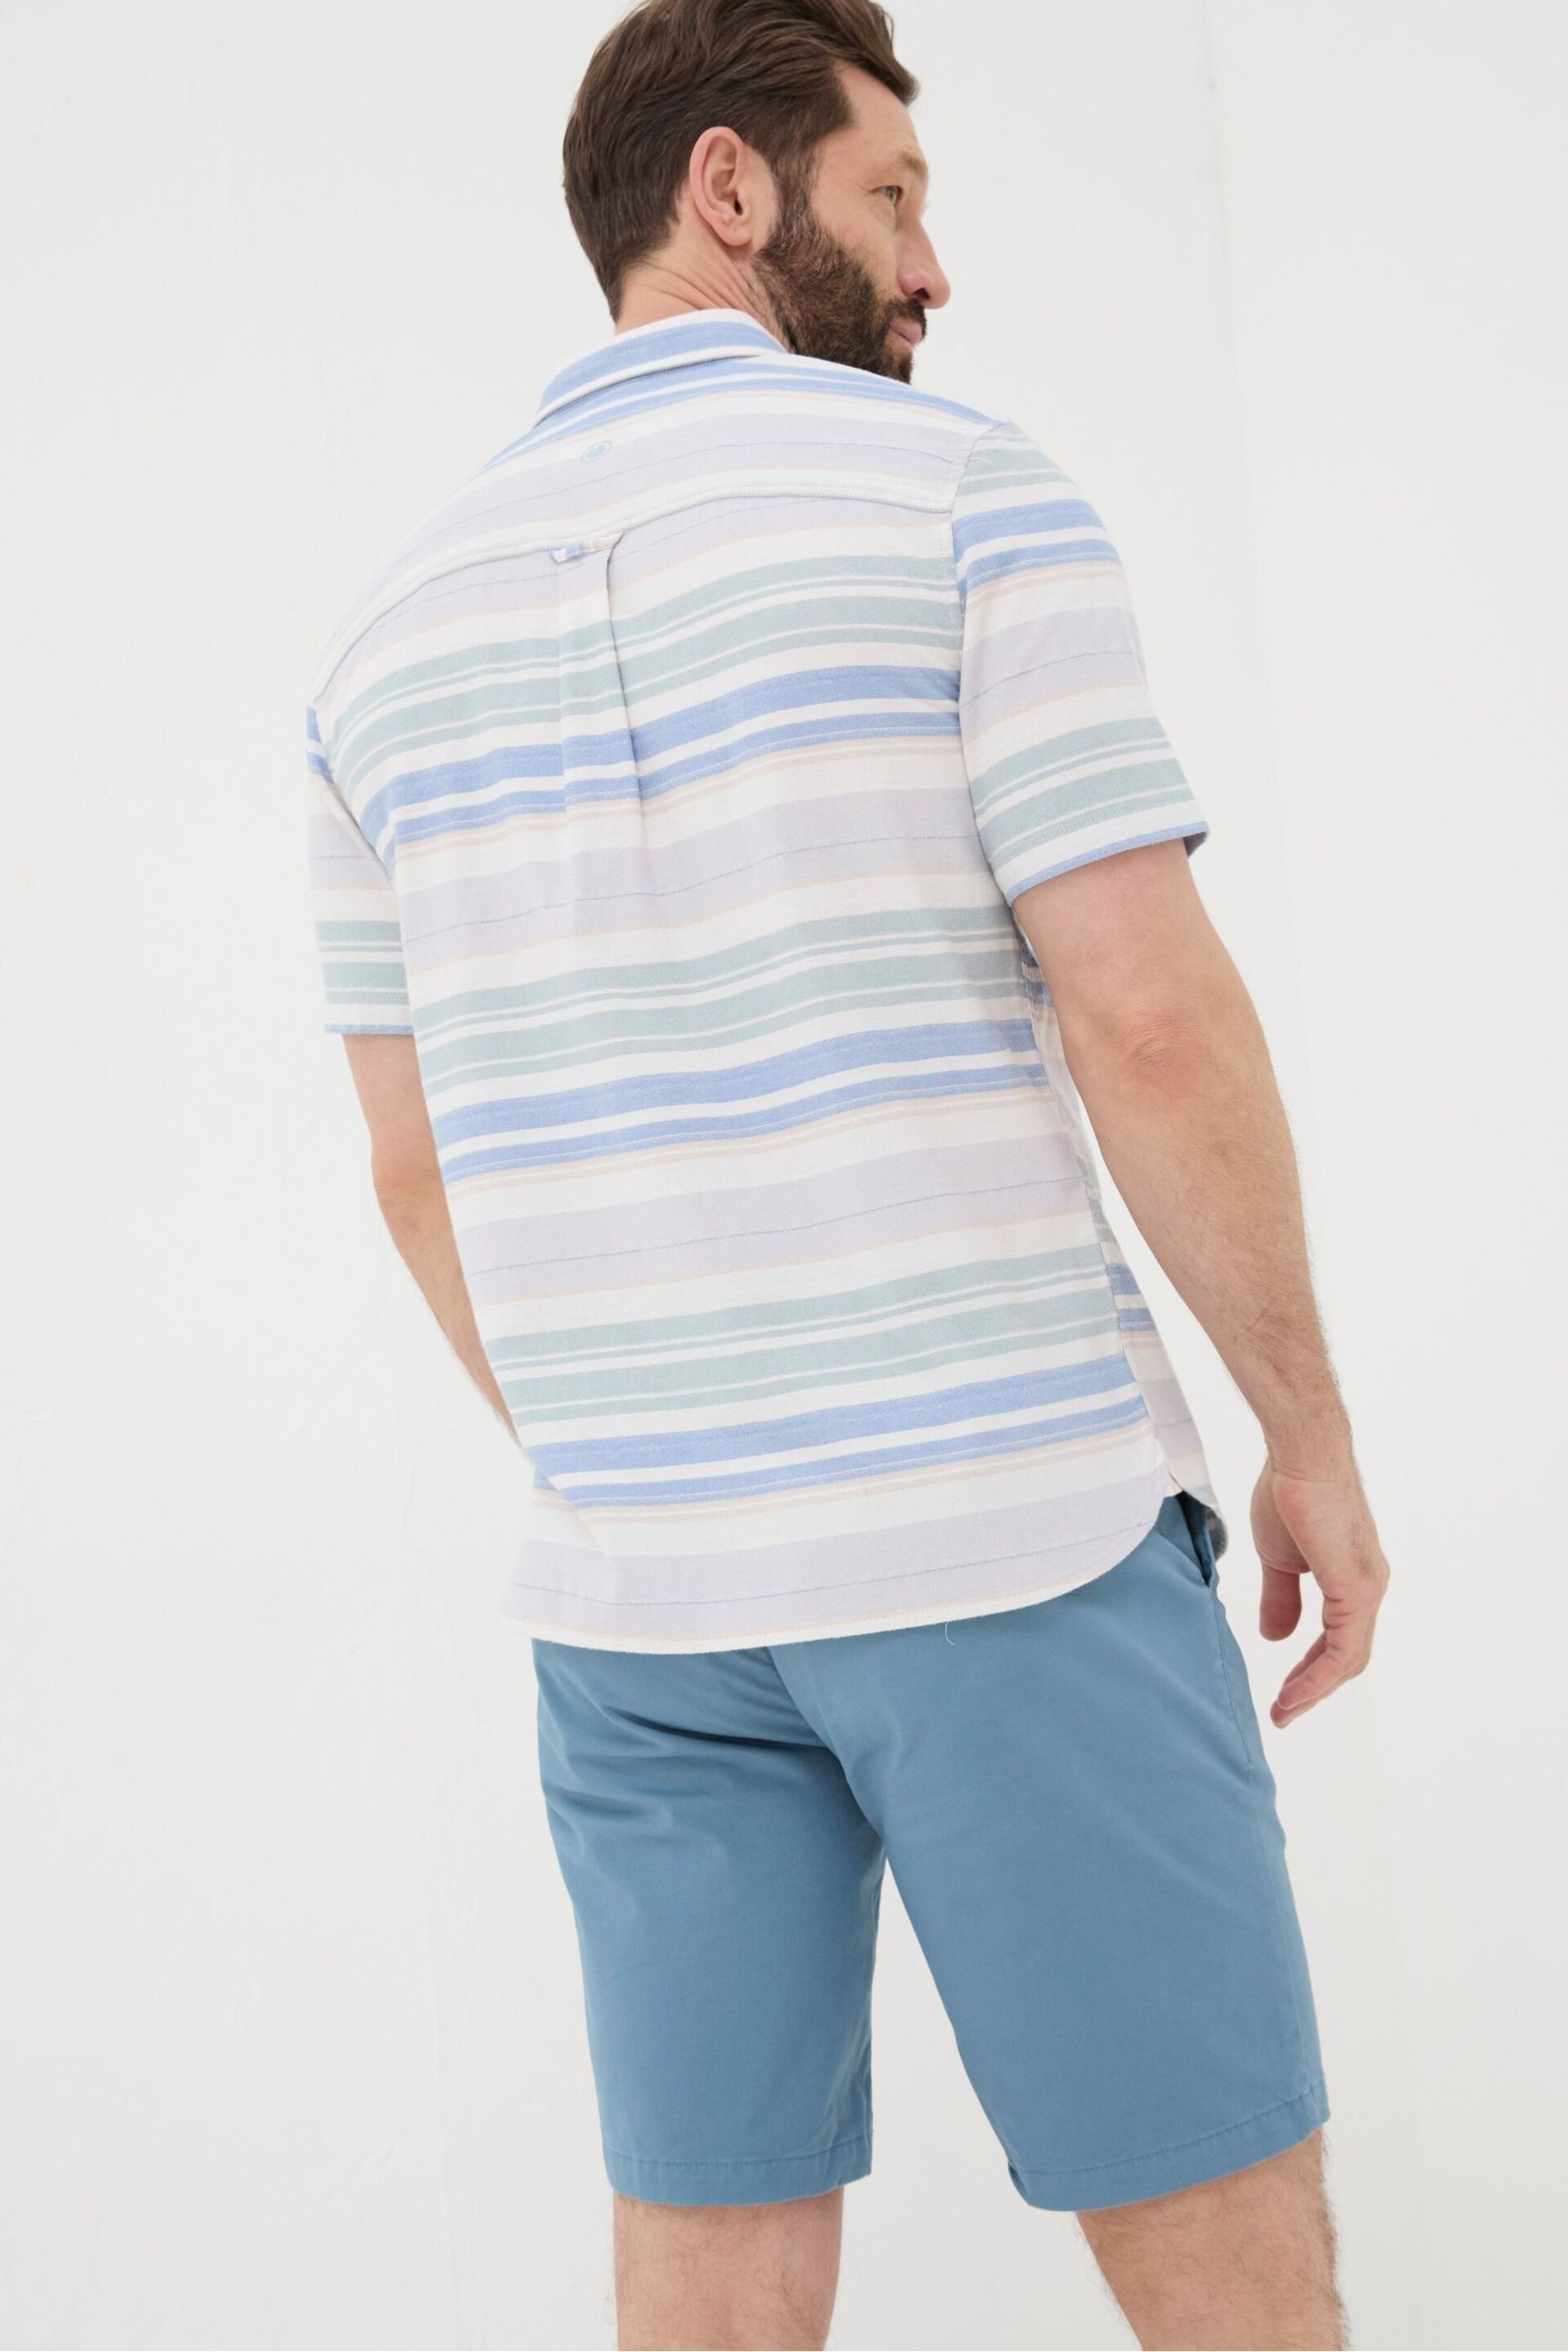 FatFace Purple Short Sleeve Trescott Stripe Shirt - Image 2 of 6